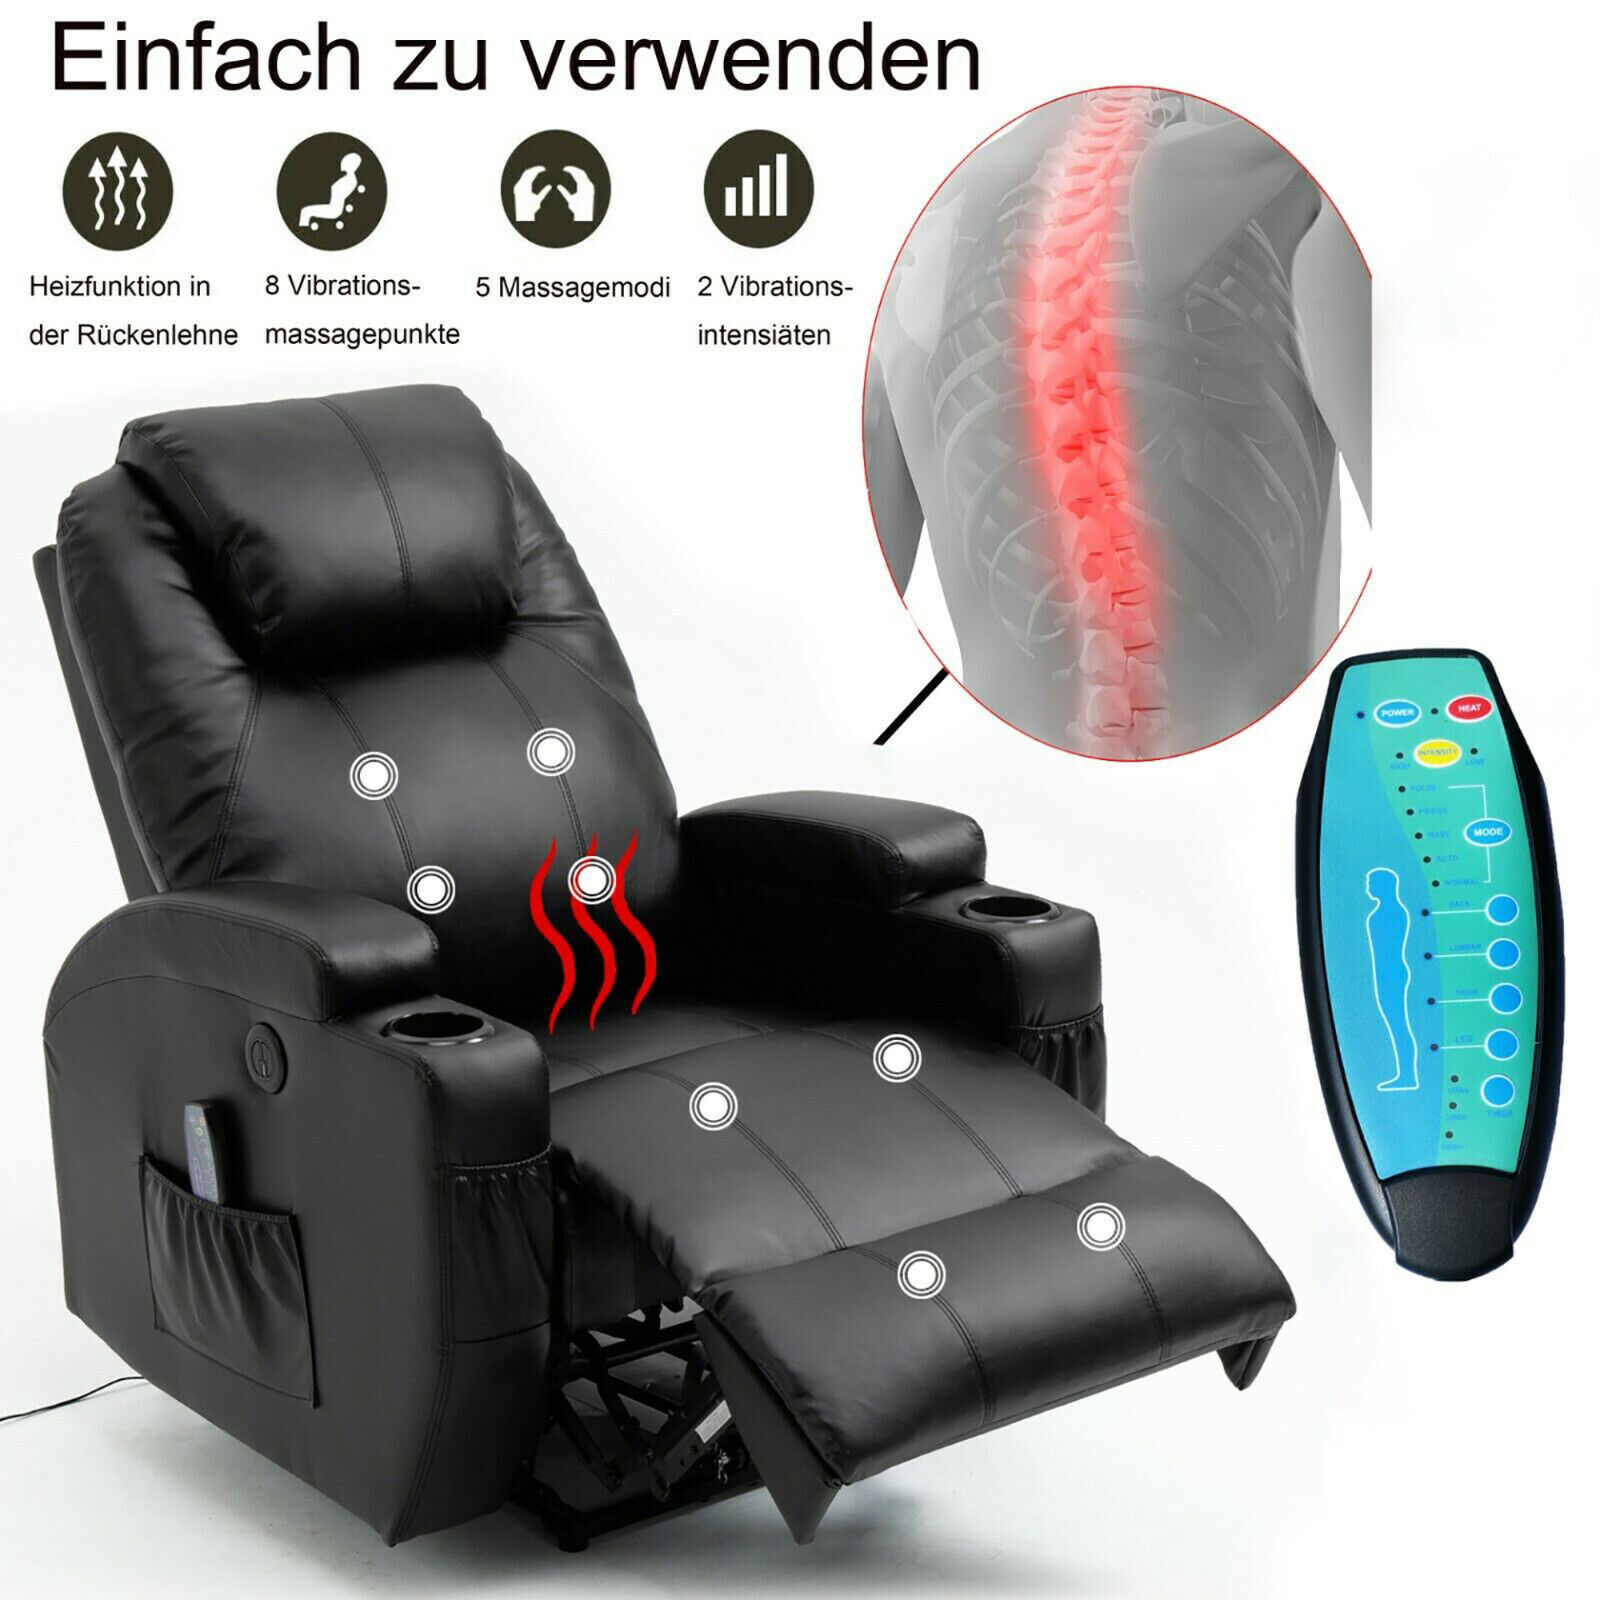 Elektrisch Massagesessel Fernsehsessel Relaxsessel Heizung Massage Fernbedienung